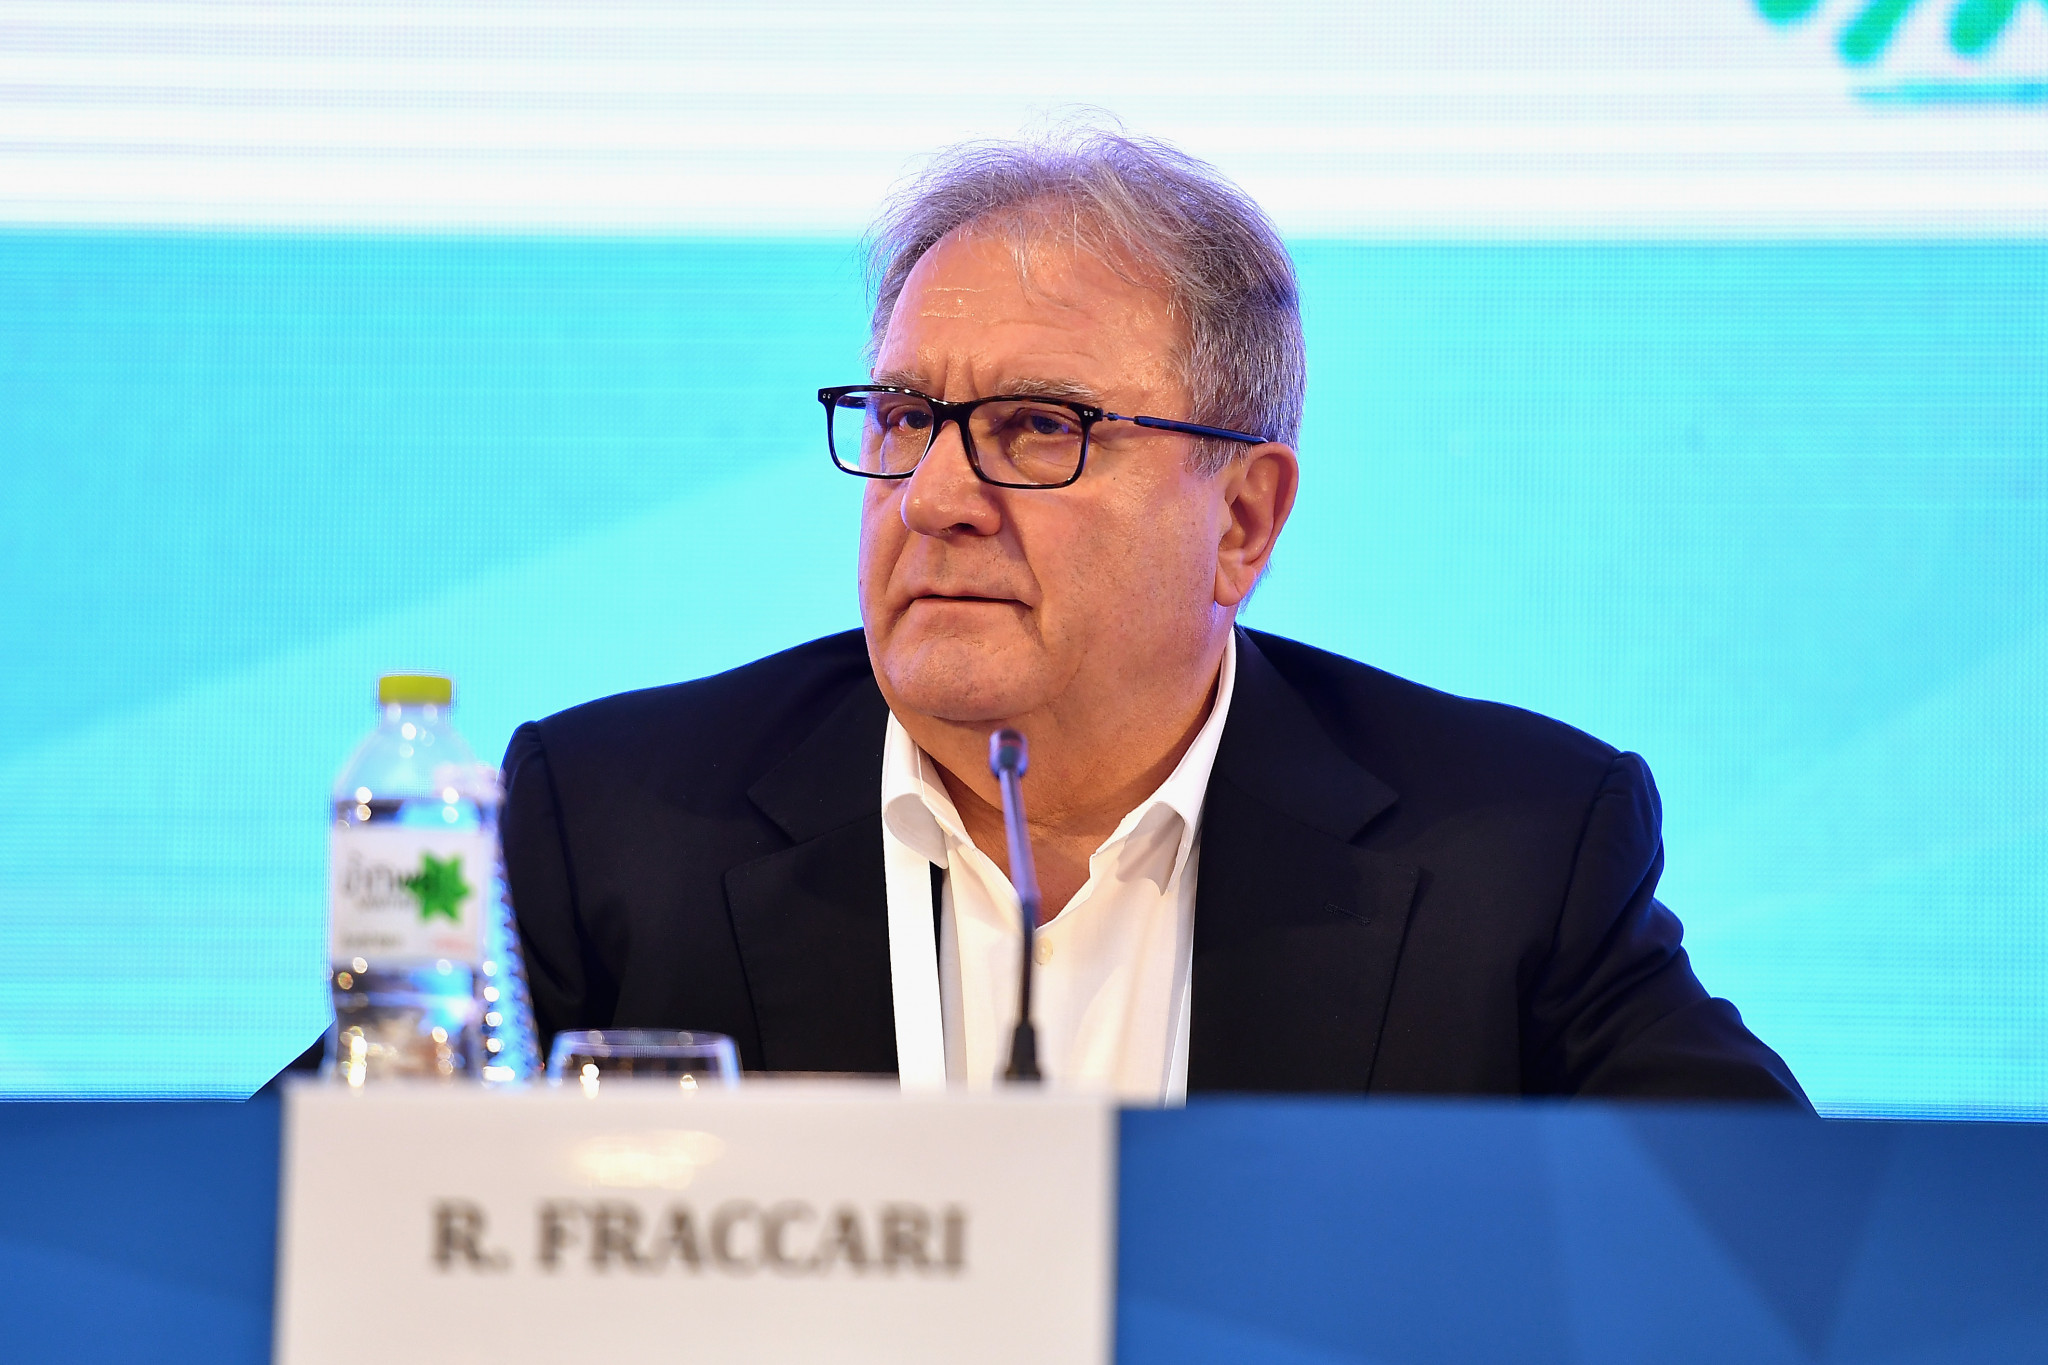 WBSC President Riccardo Fraccari has said that the WBSC is 